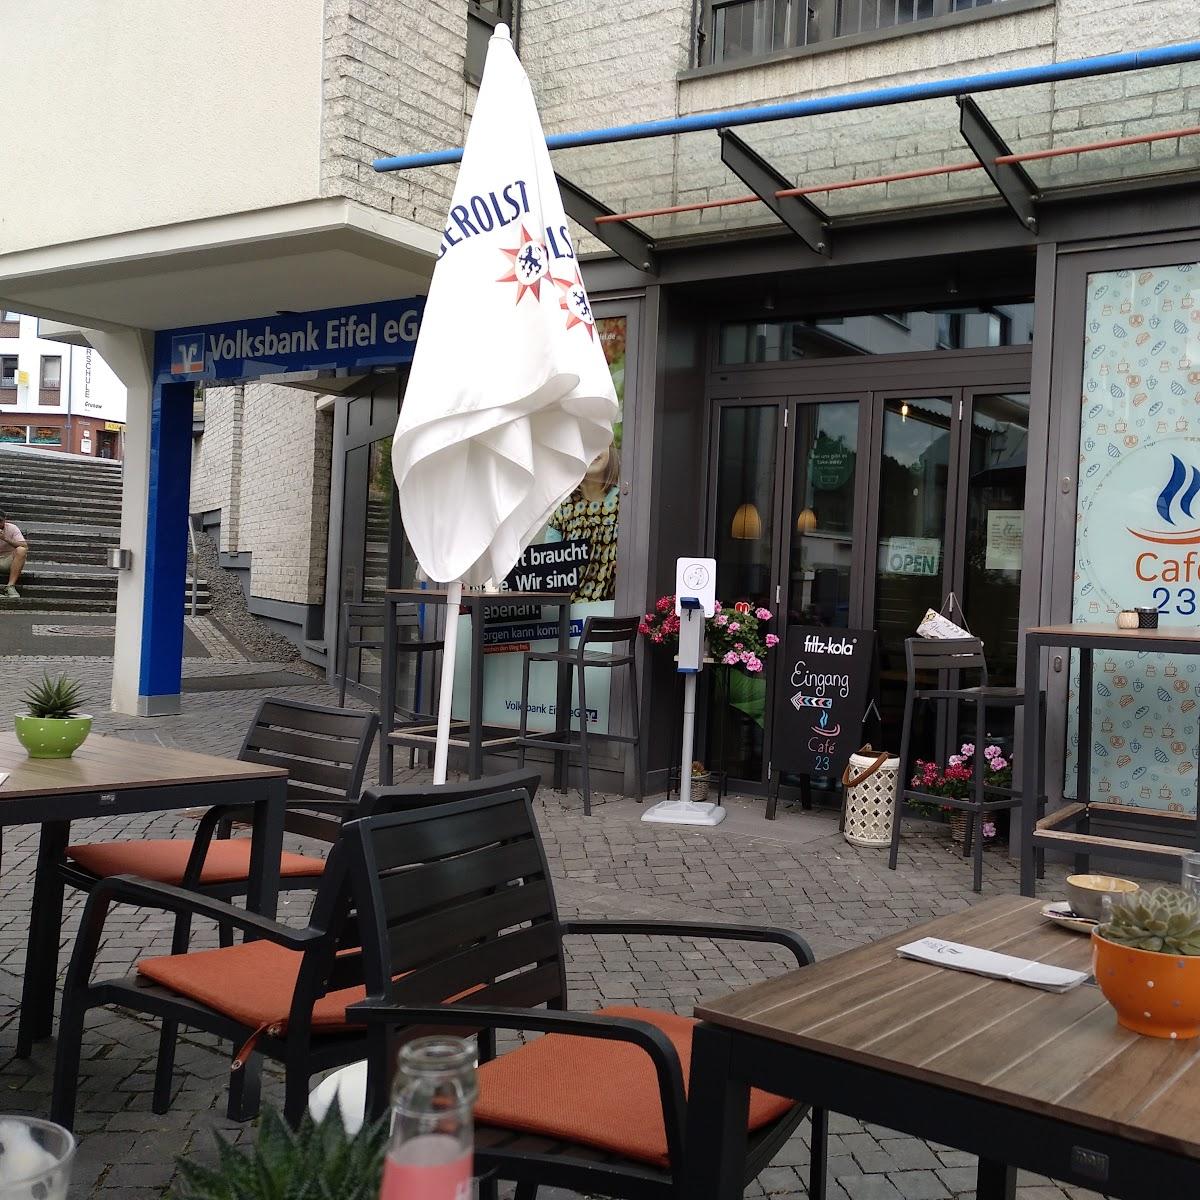 Restaurant "Café 23" in Prüm